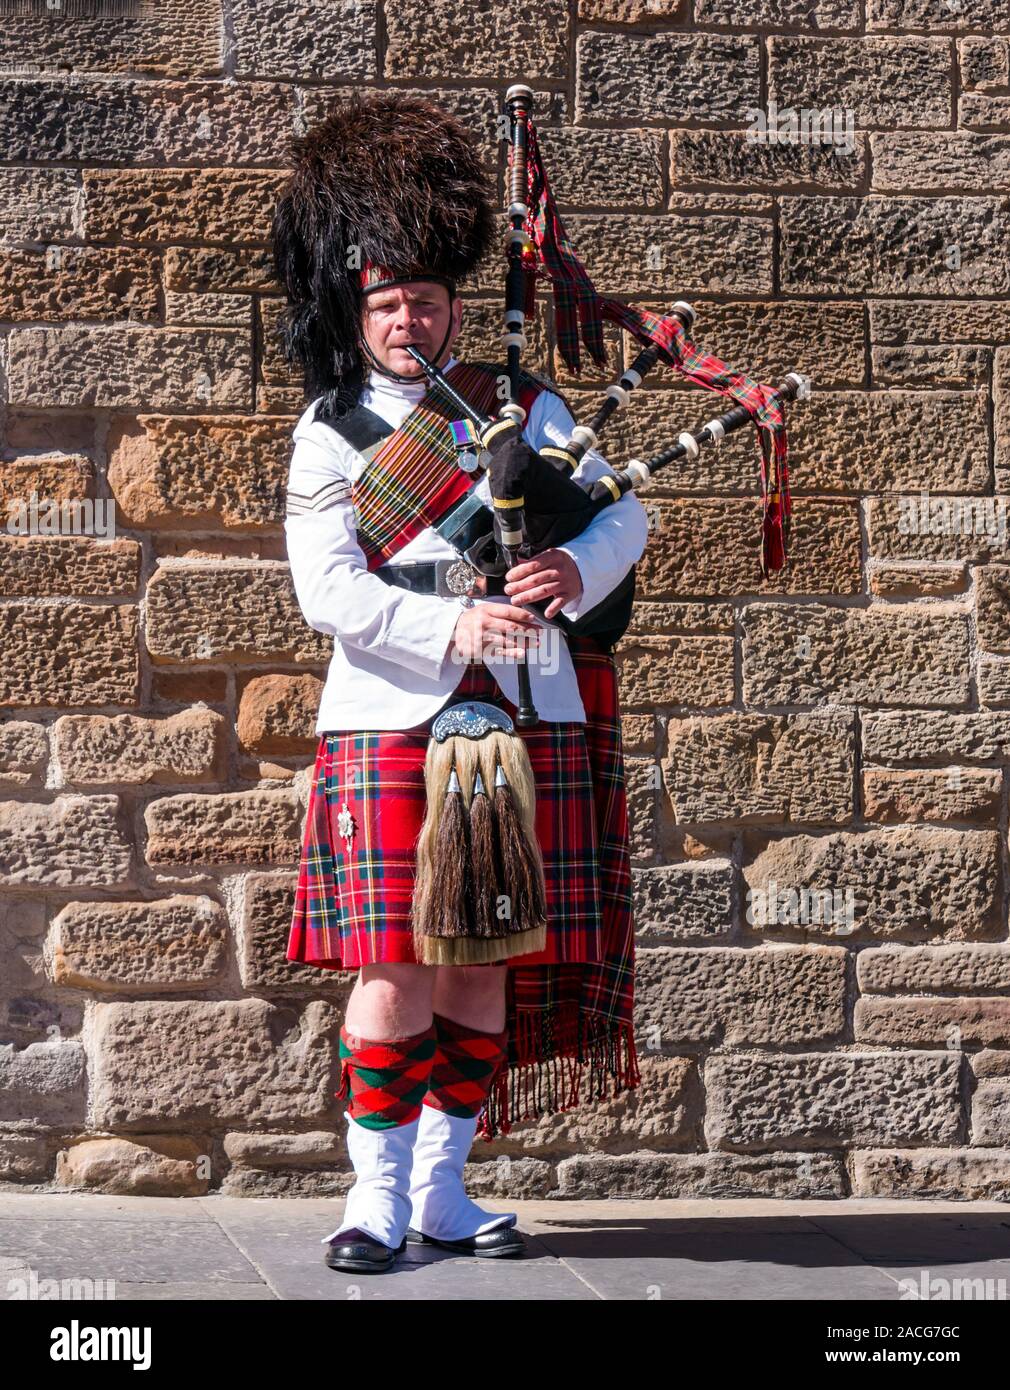 Bagpipe player busker wearing kilt and dress uniform, Royal Mile, Edinburgh, Scotland, UK Stock Photo